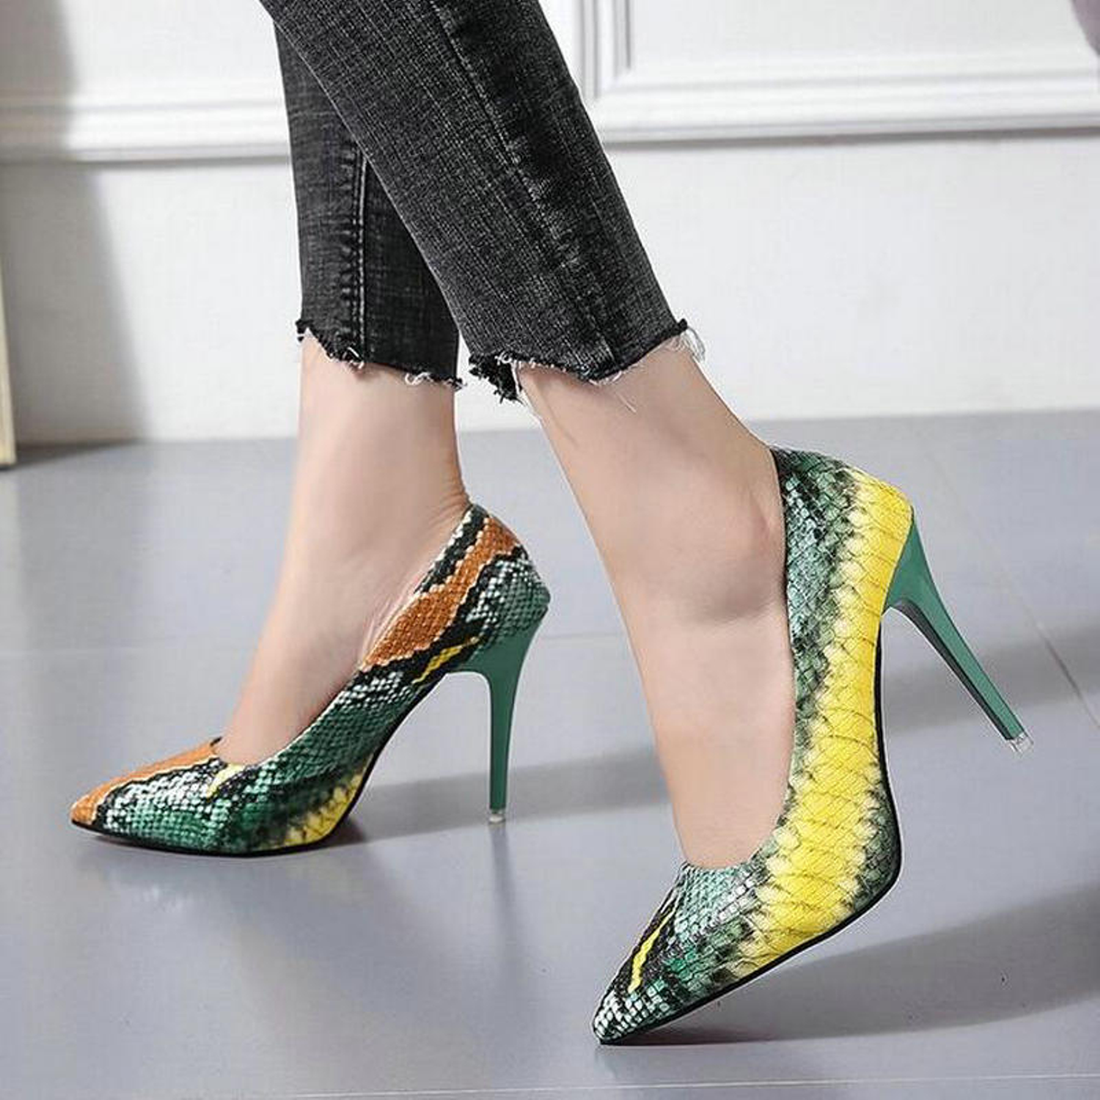 Women's Spring High Heel Pumps With Snakeskin Print